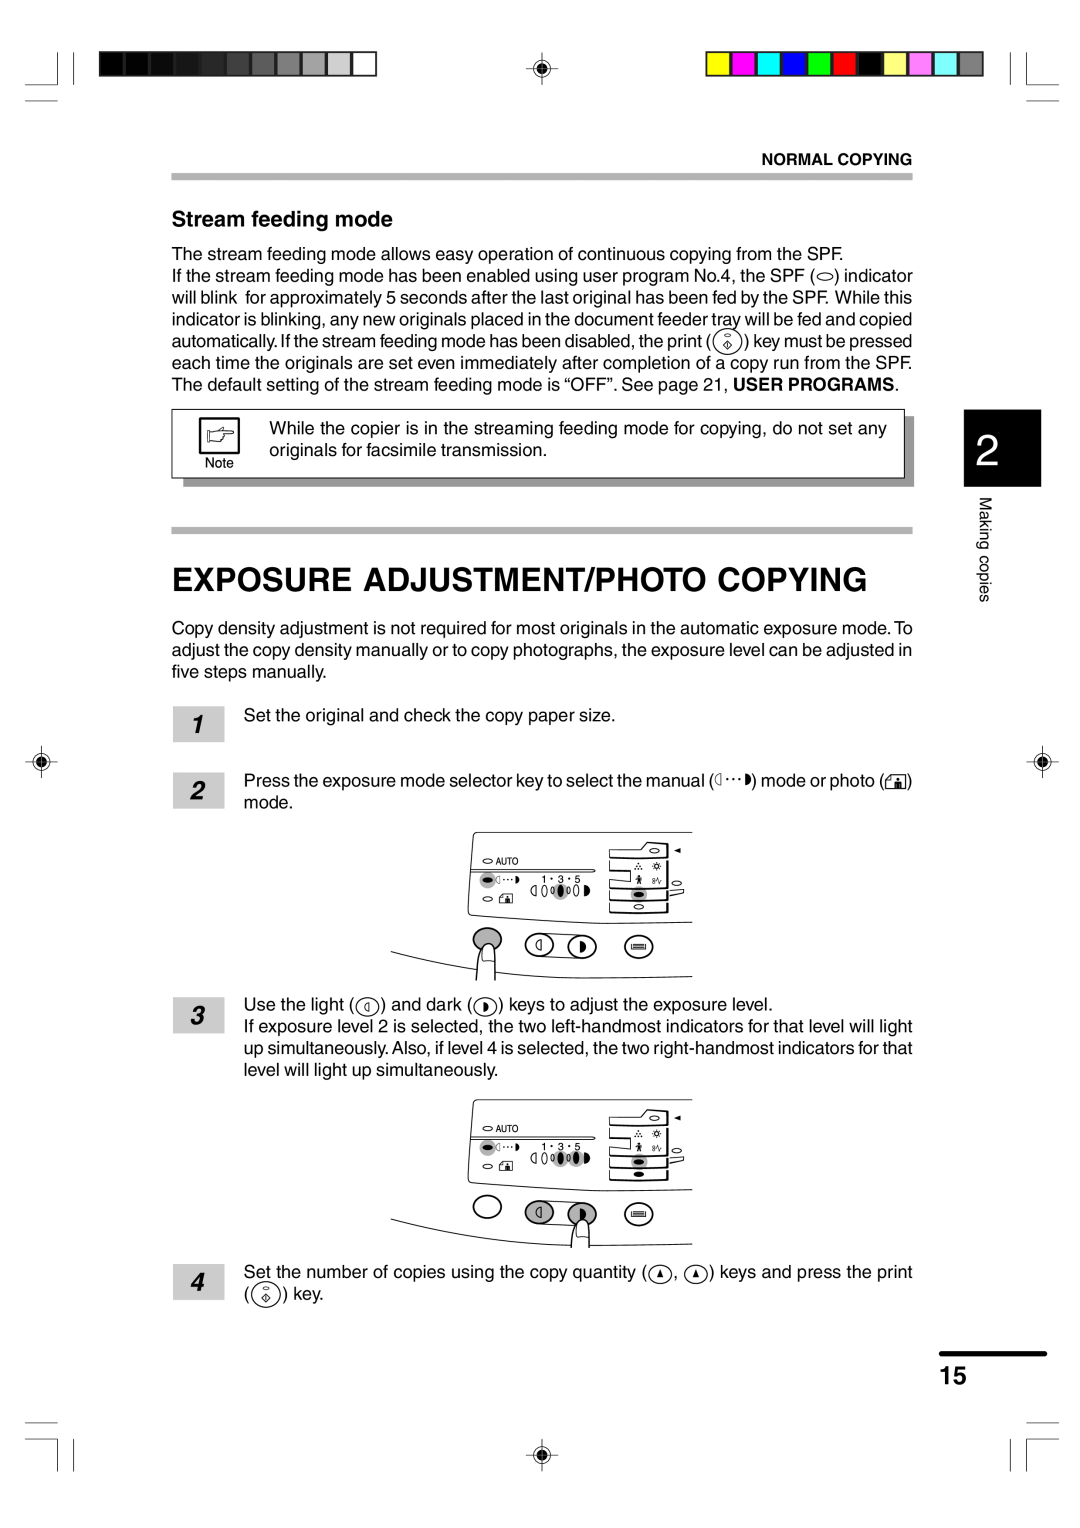 Sharp AR-F152 operation manual Exposure Adjustment/Photo Copying, Stream feeding mode 